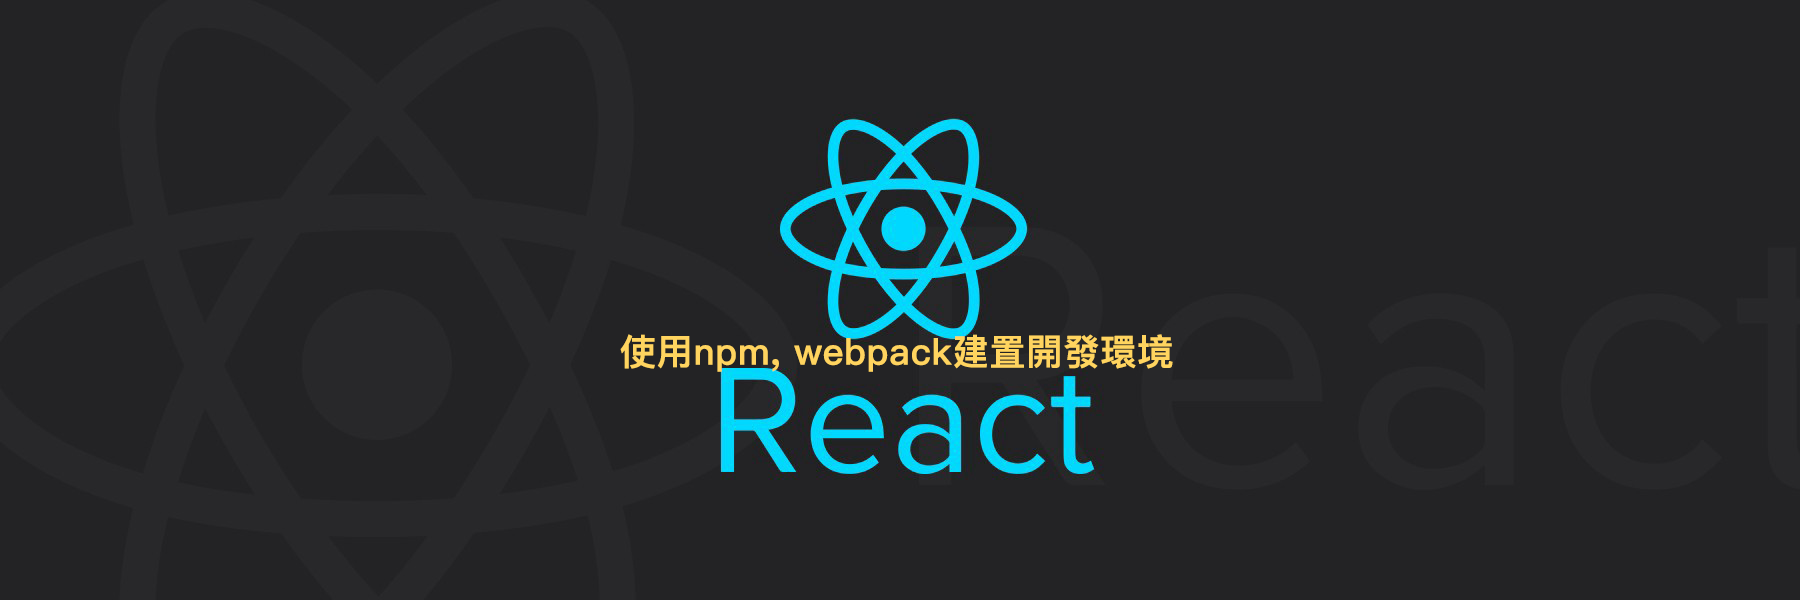 [ReactJS] 使用Webpack, npm建置React開發環境